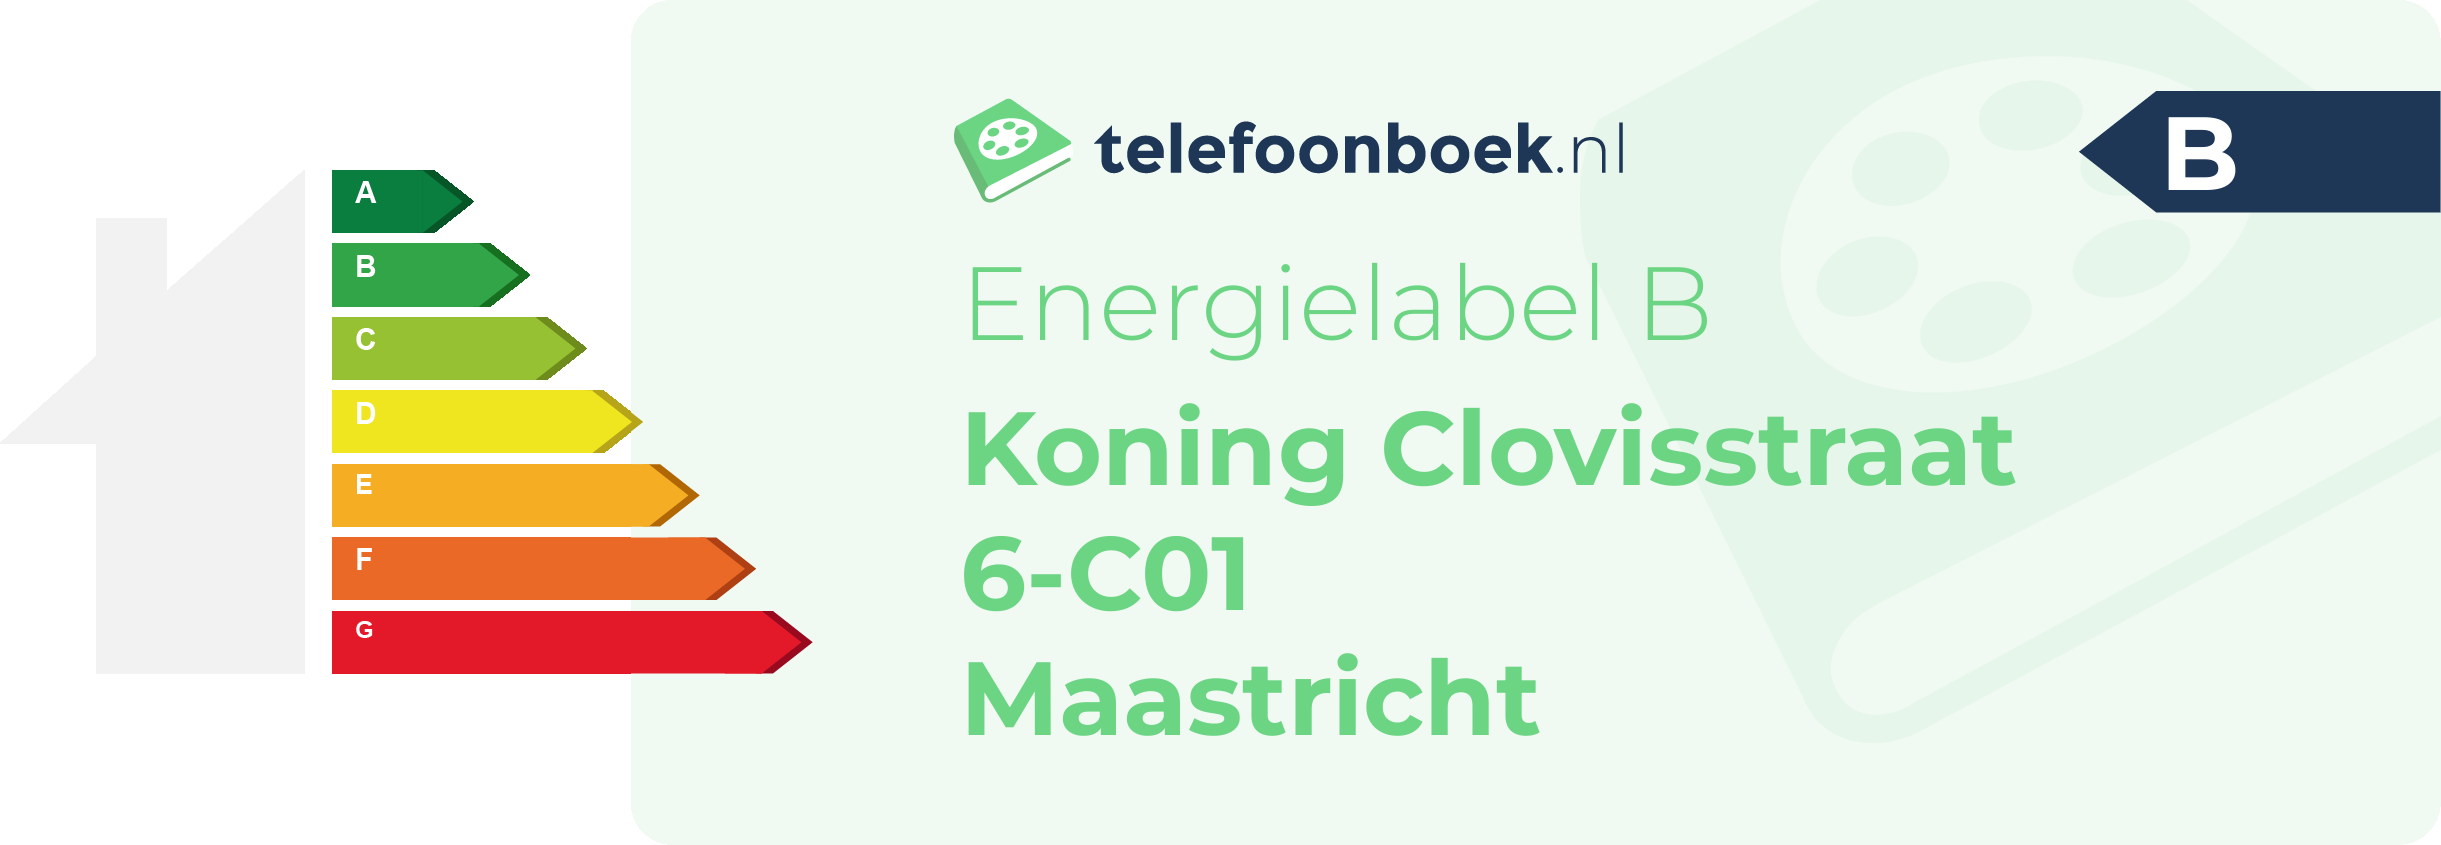 Energielabel Koning Clovisstraat 6-C01 Maastricht